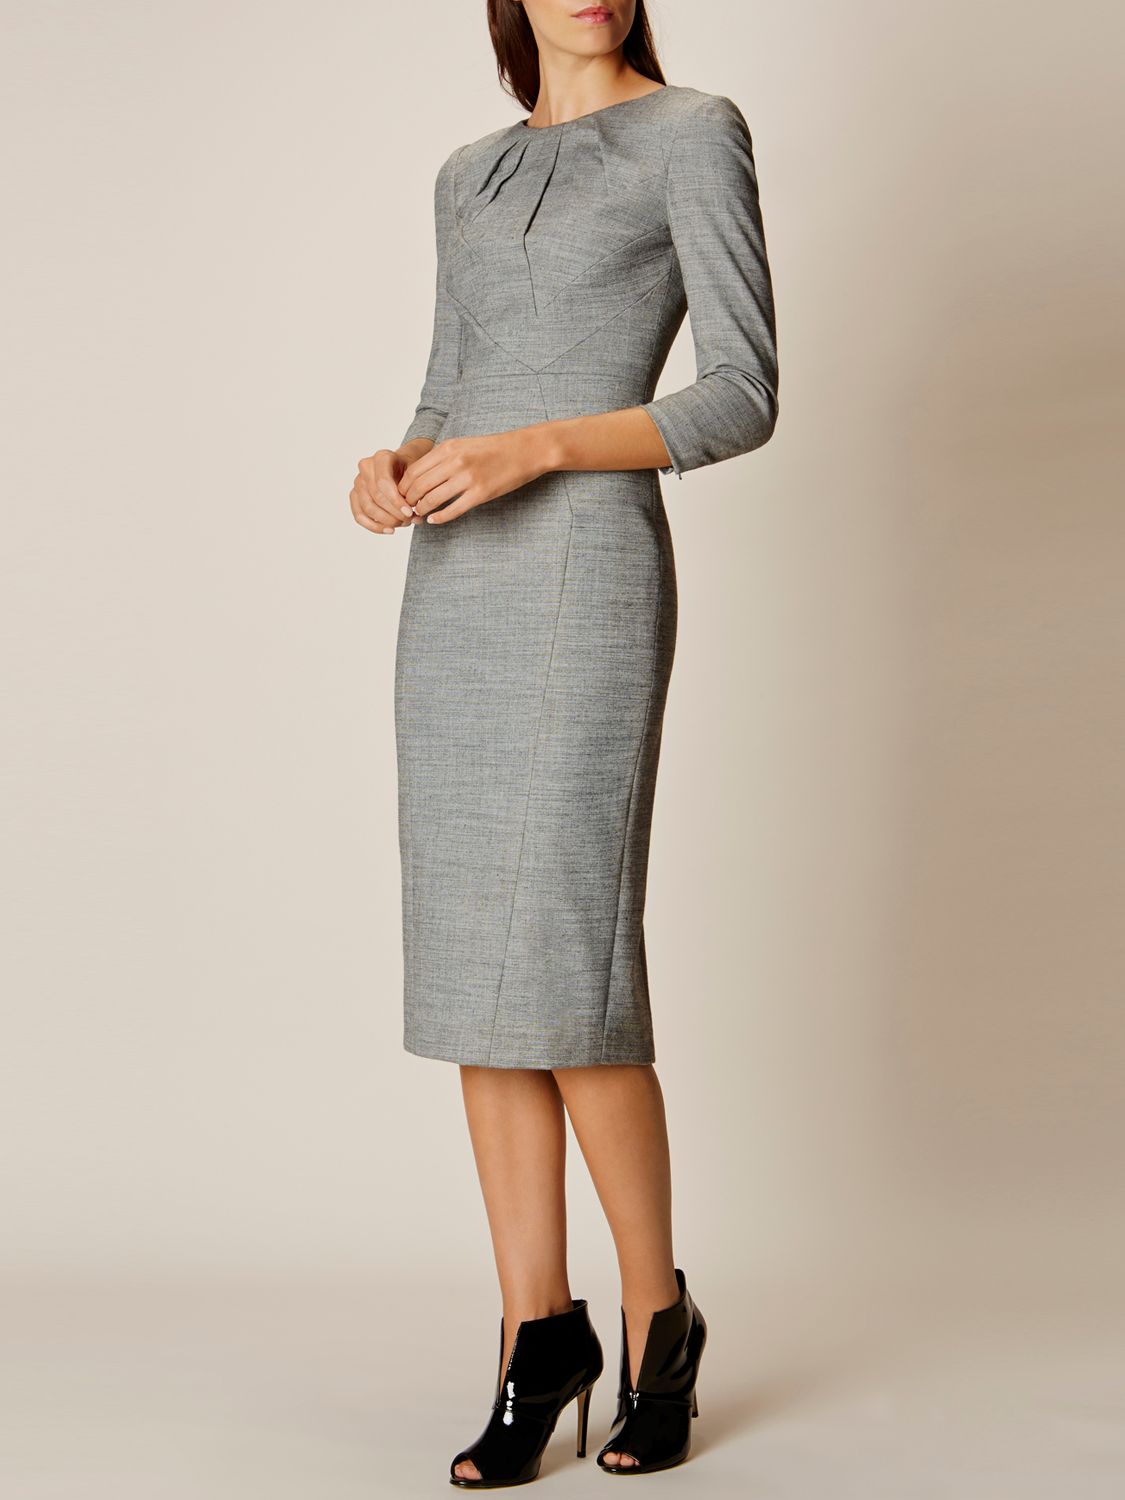 Karen Millen Tailored Folded Collection Dress, Grey at John Lewis ...